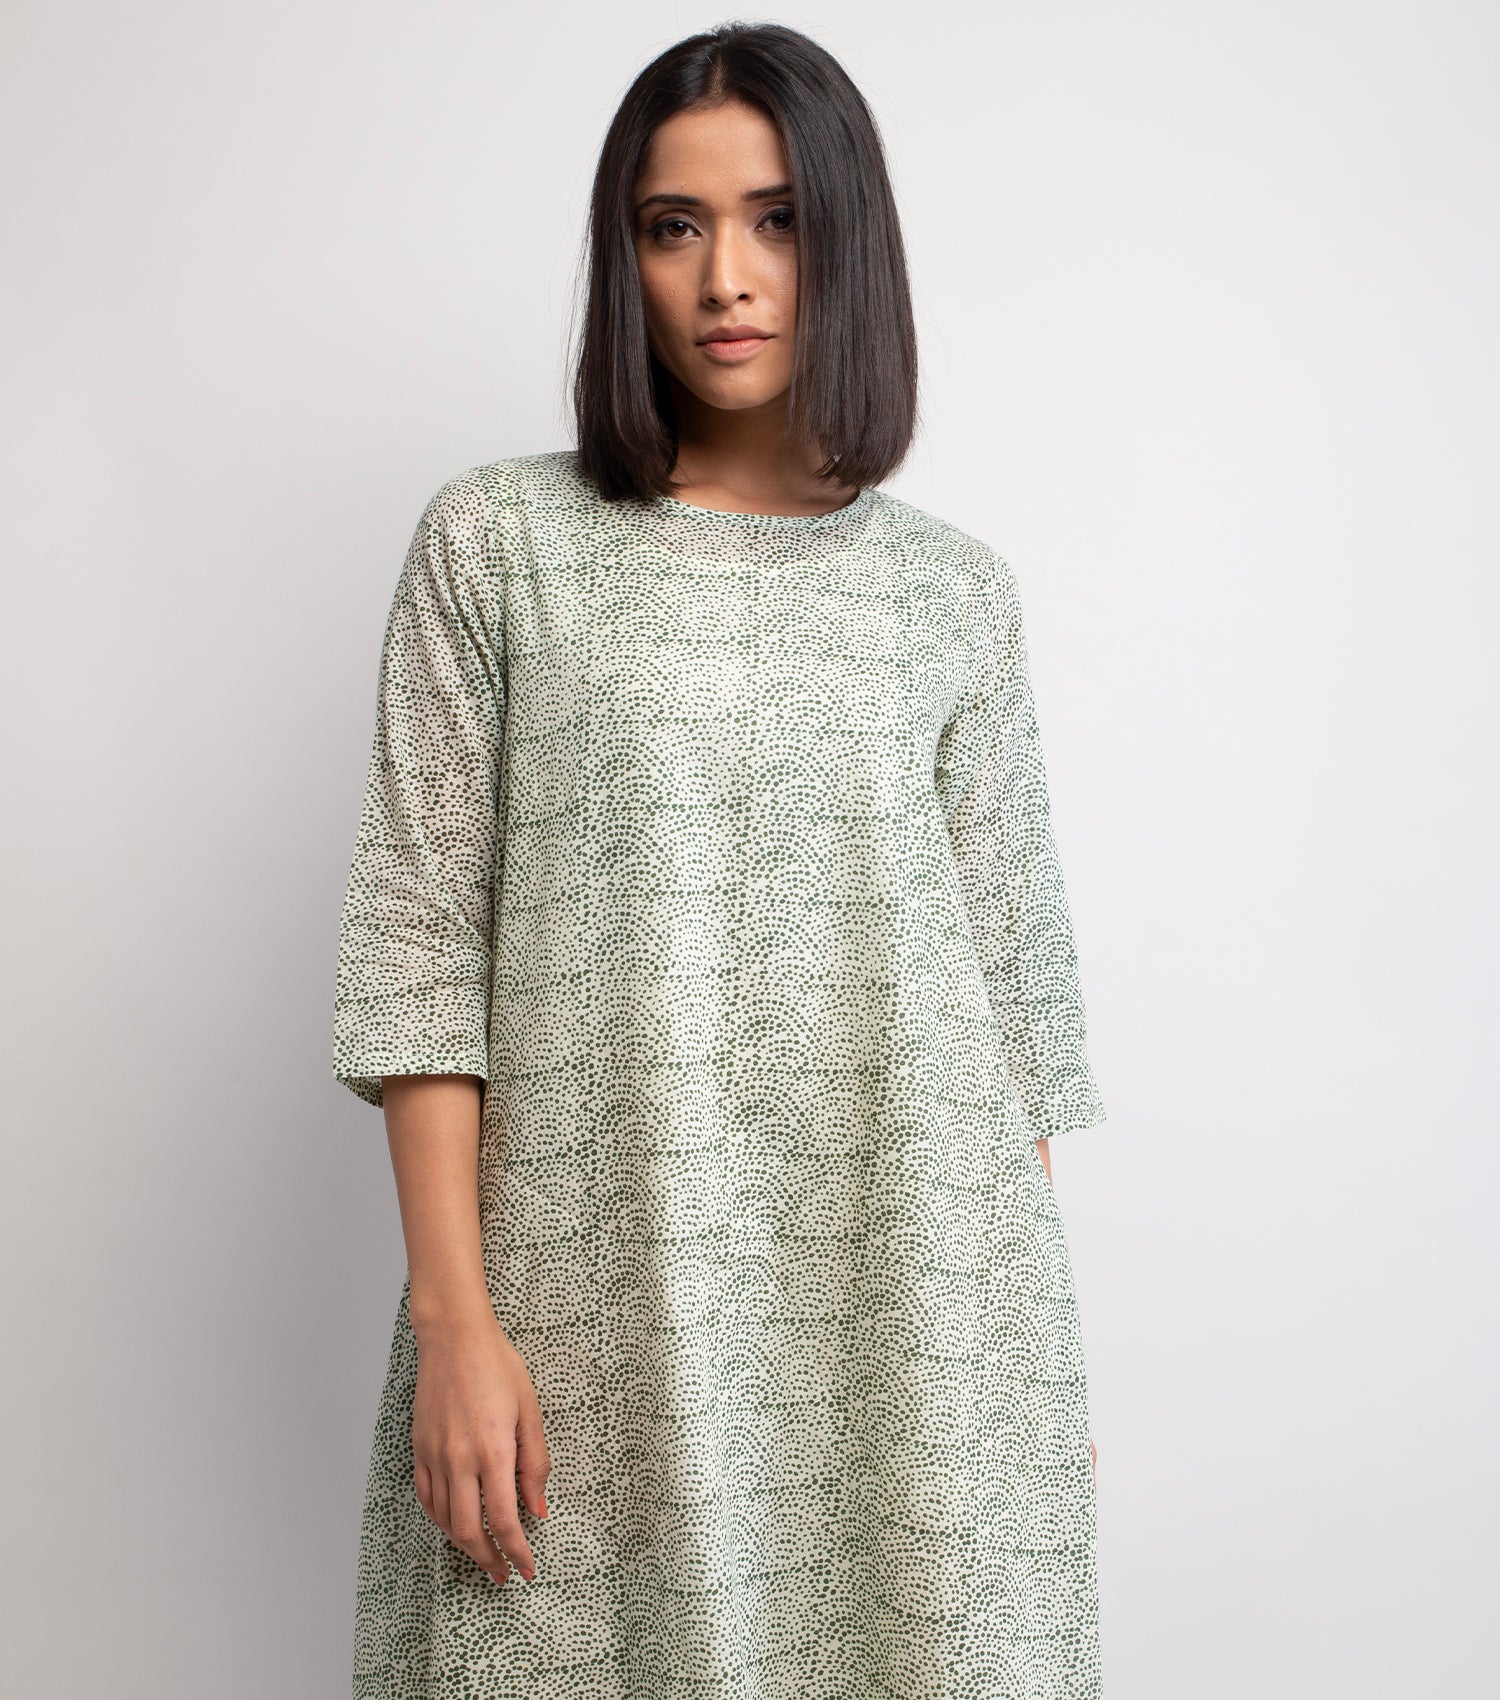 Beige & Green Printed Cotton Dress